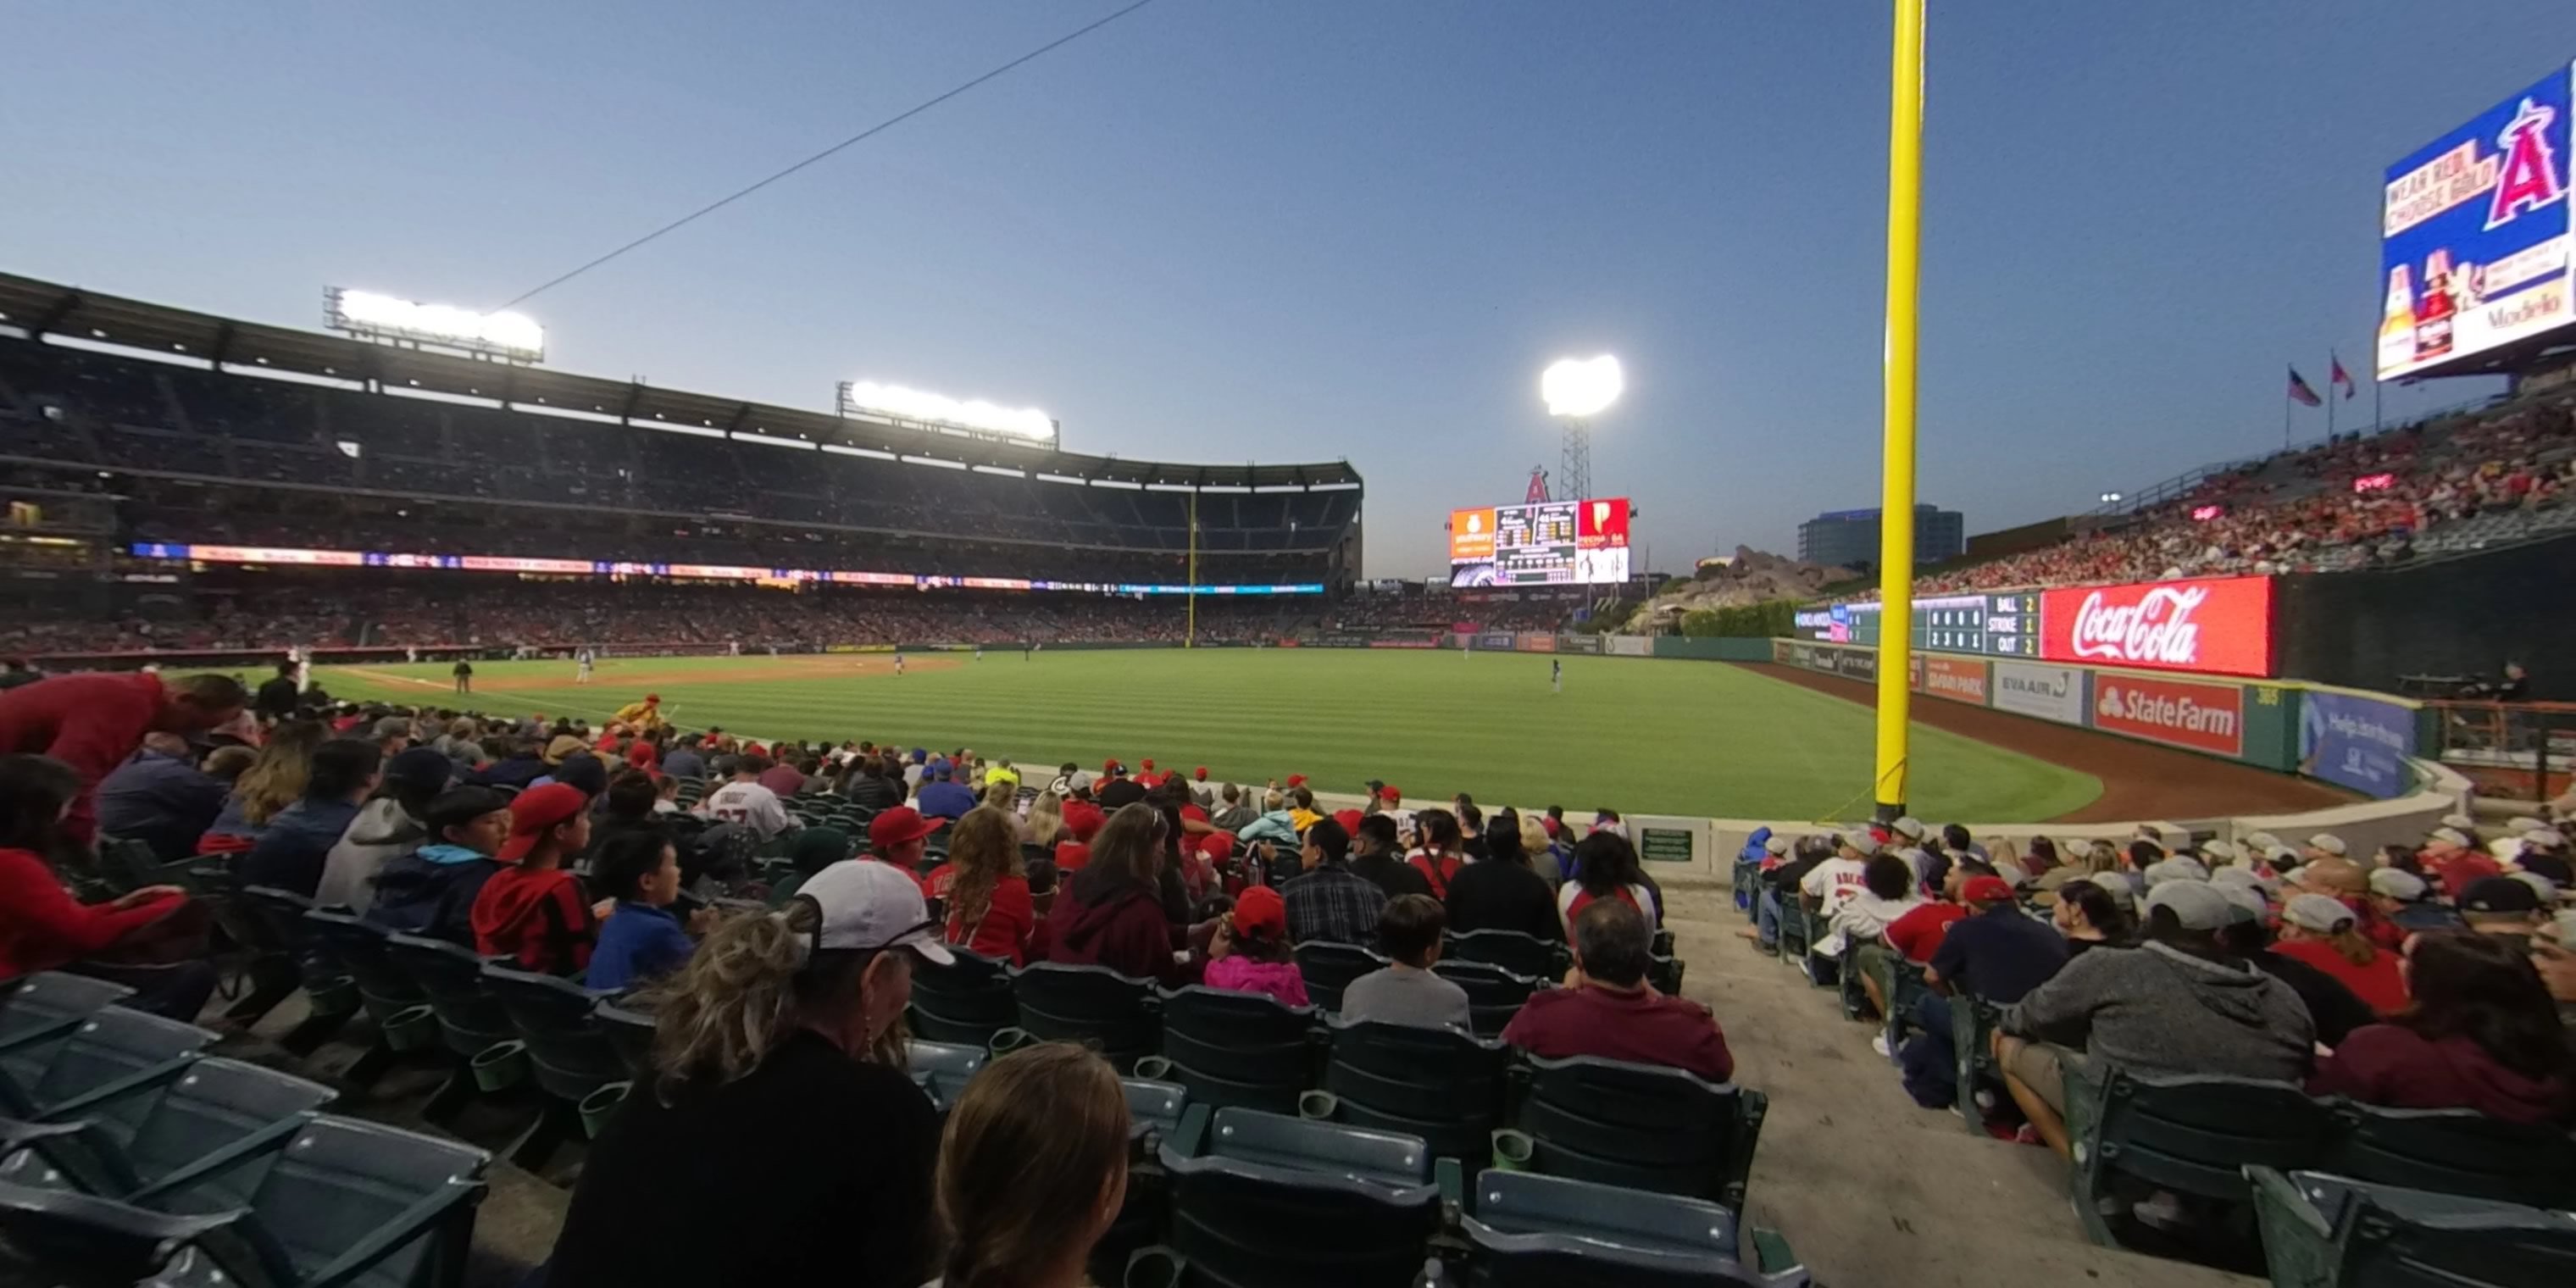 section 132 panoramic seat view  - angel stadium